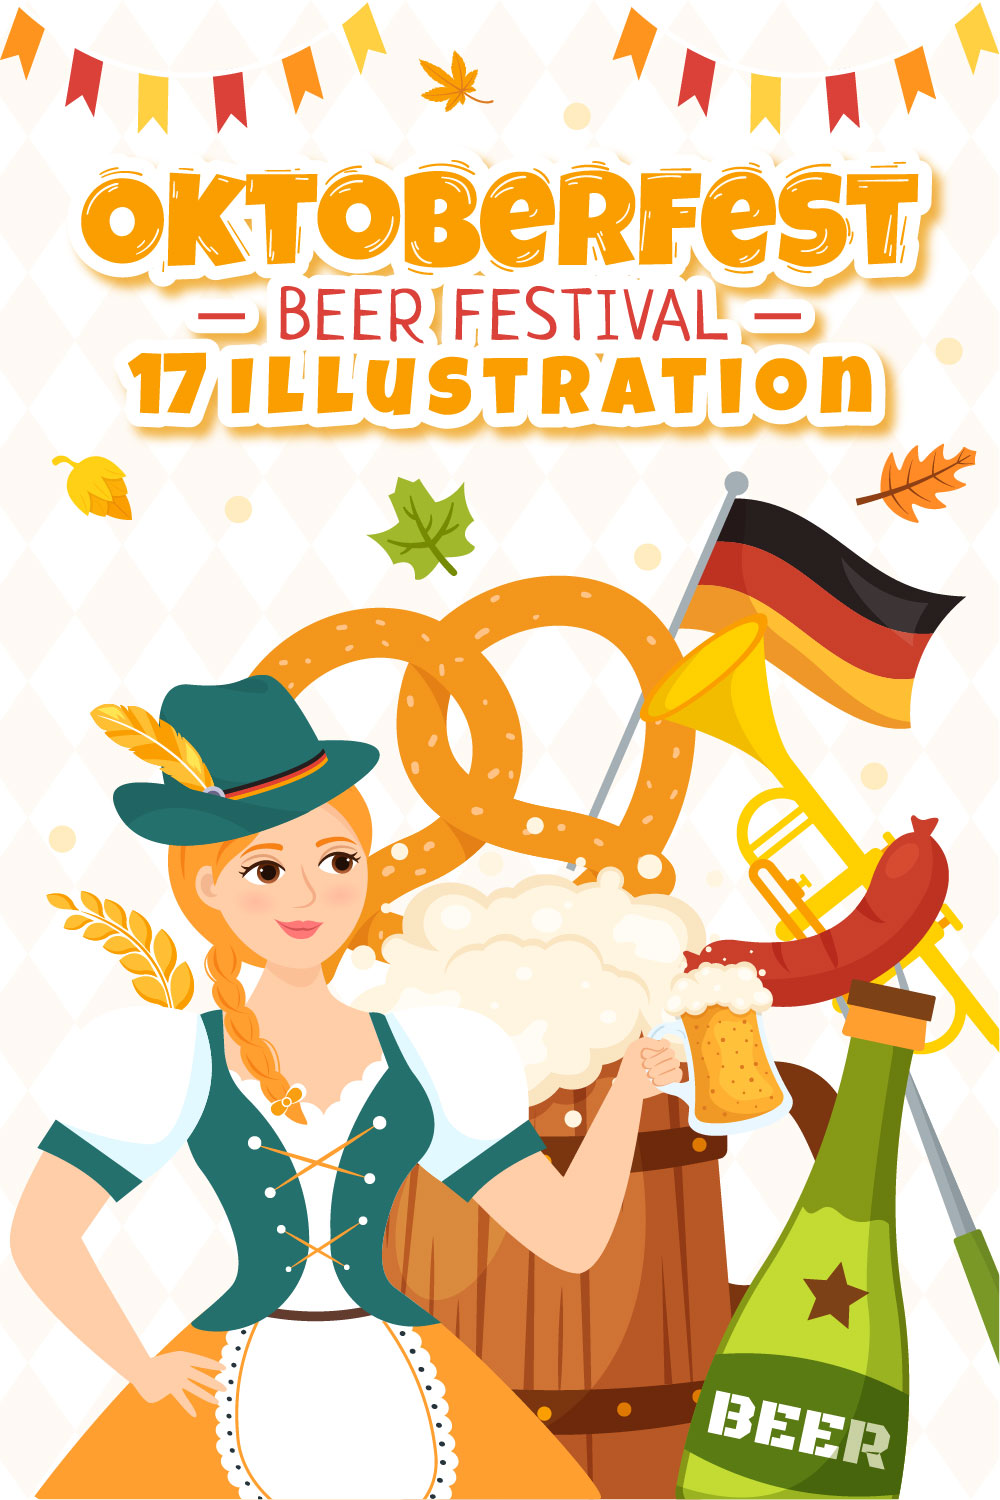 17 Happy Oktoberfest Beer Festival Illustration pinterest preview image.